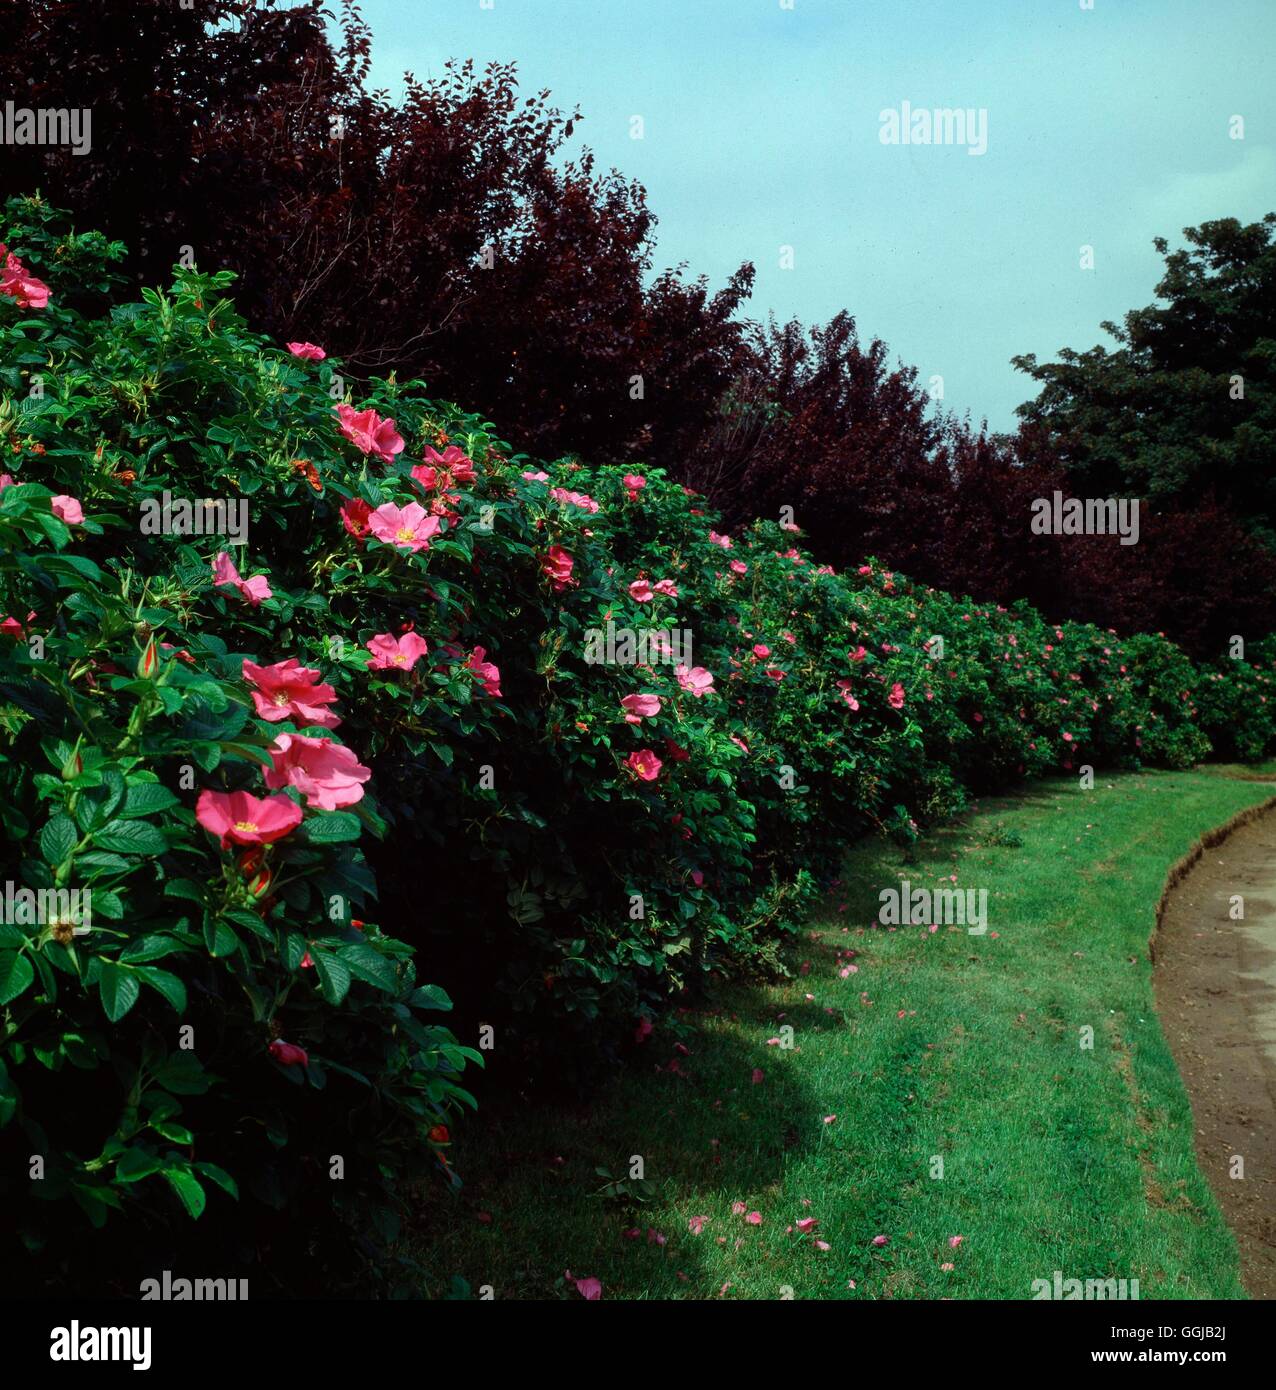 Siepe di rose immagini e fotografie stock ad alta risoluzione - Alamy